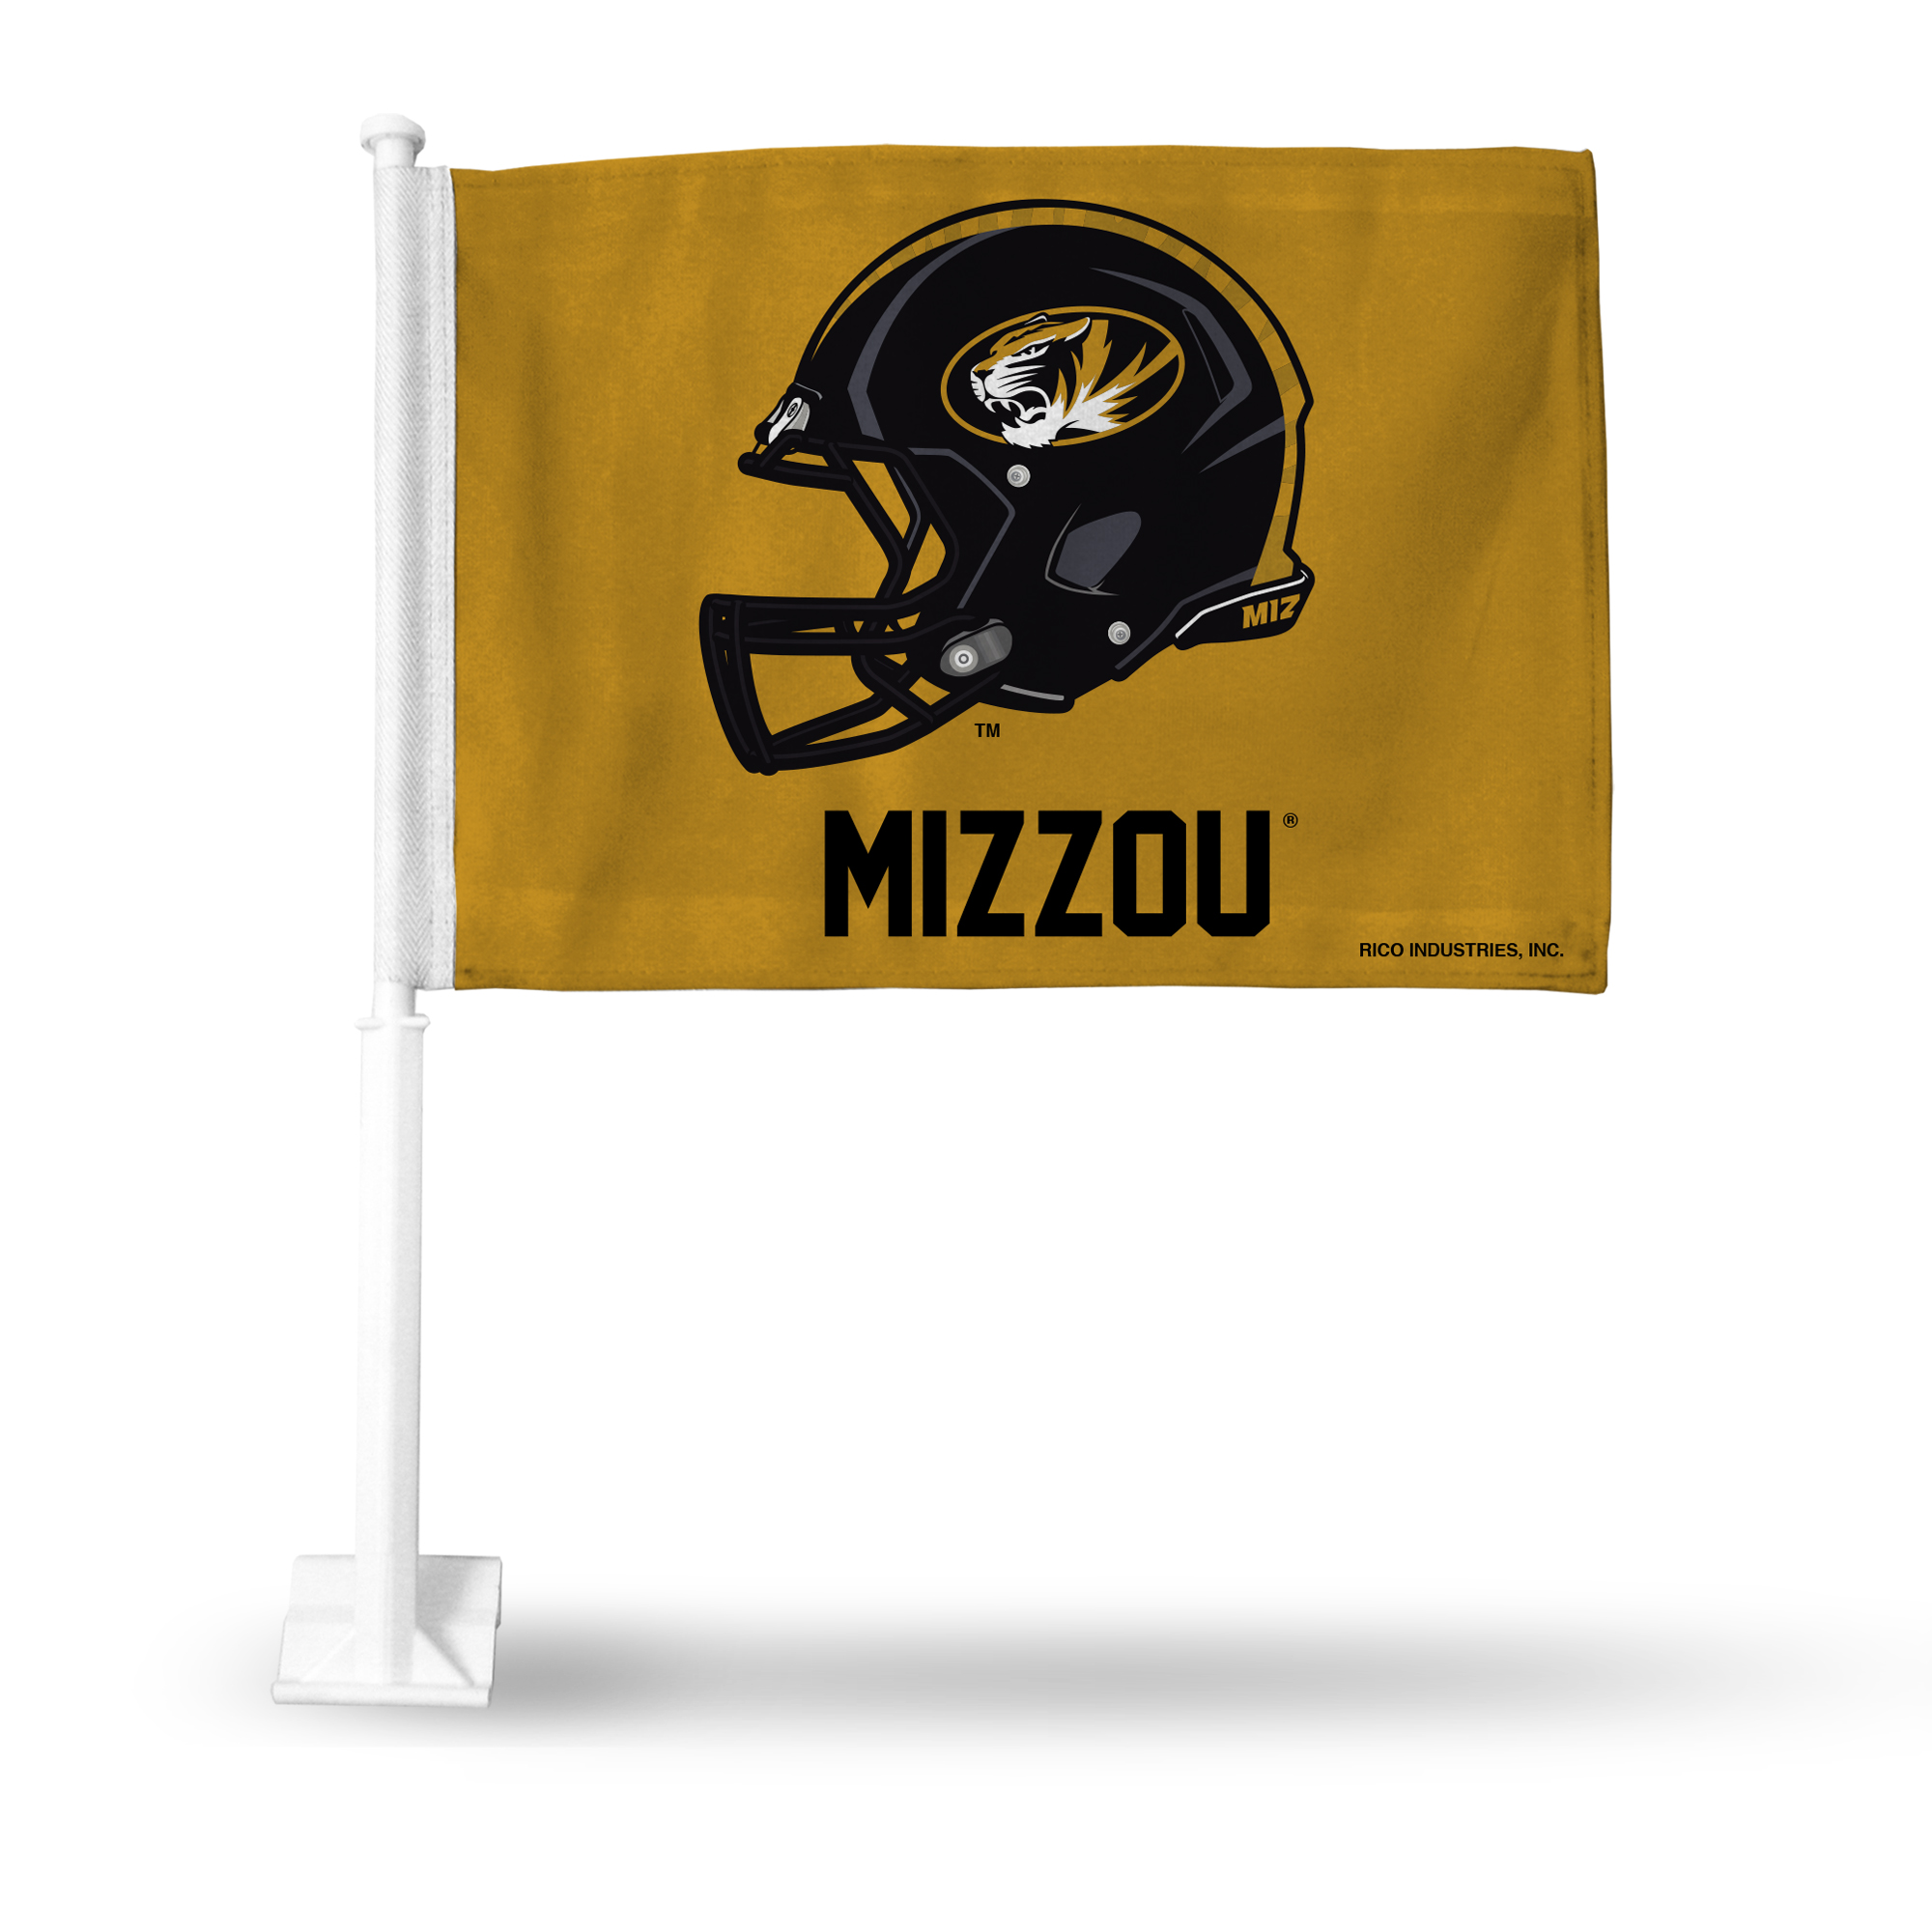 Missouri MIZZOU Tigers 11X14 Window Mount 2-Sided Car Flag - image 1 of 5